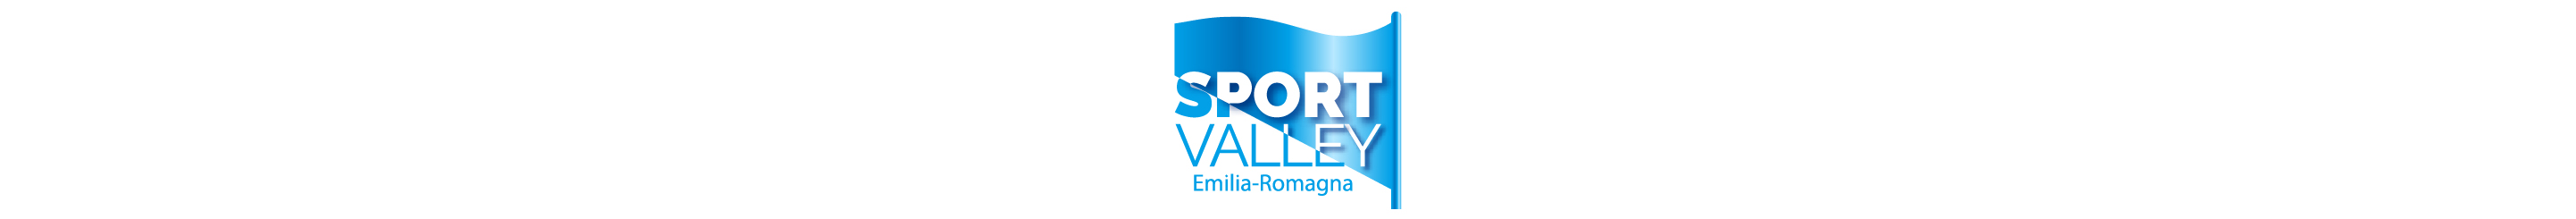 02-a-sport-valley